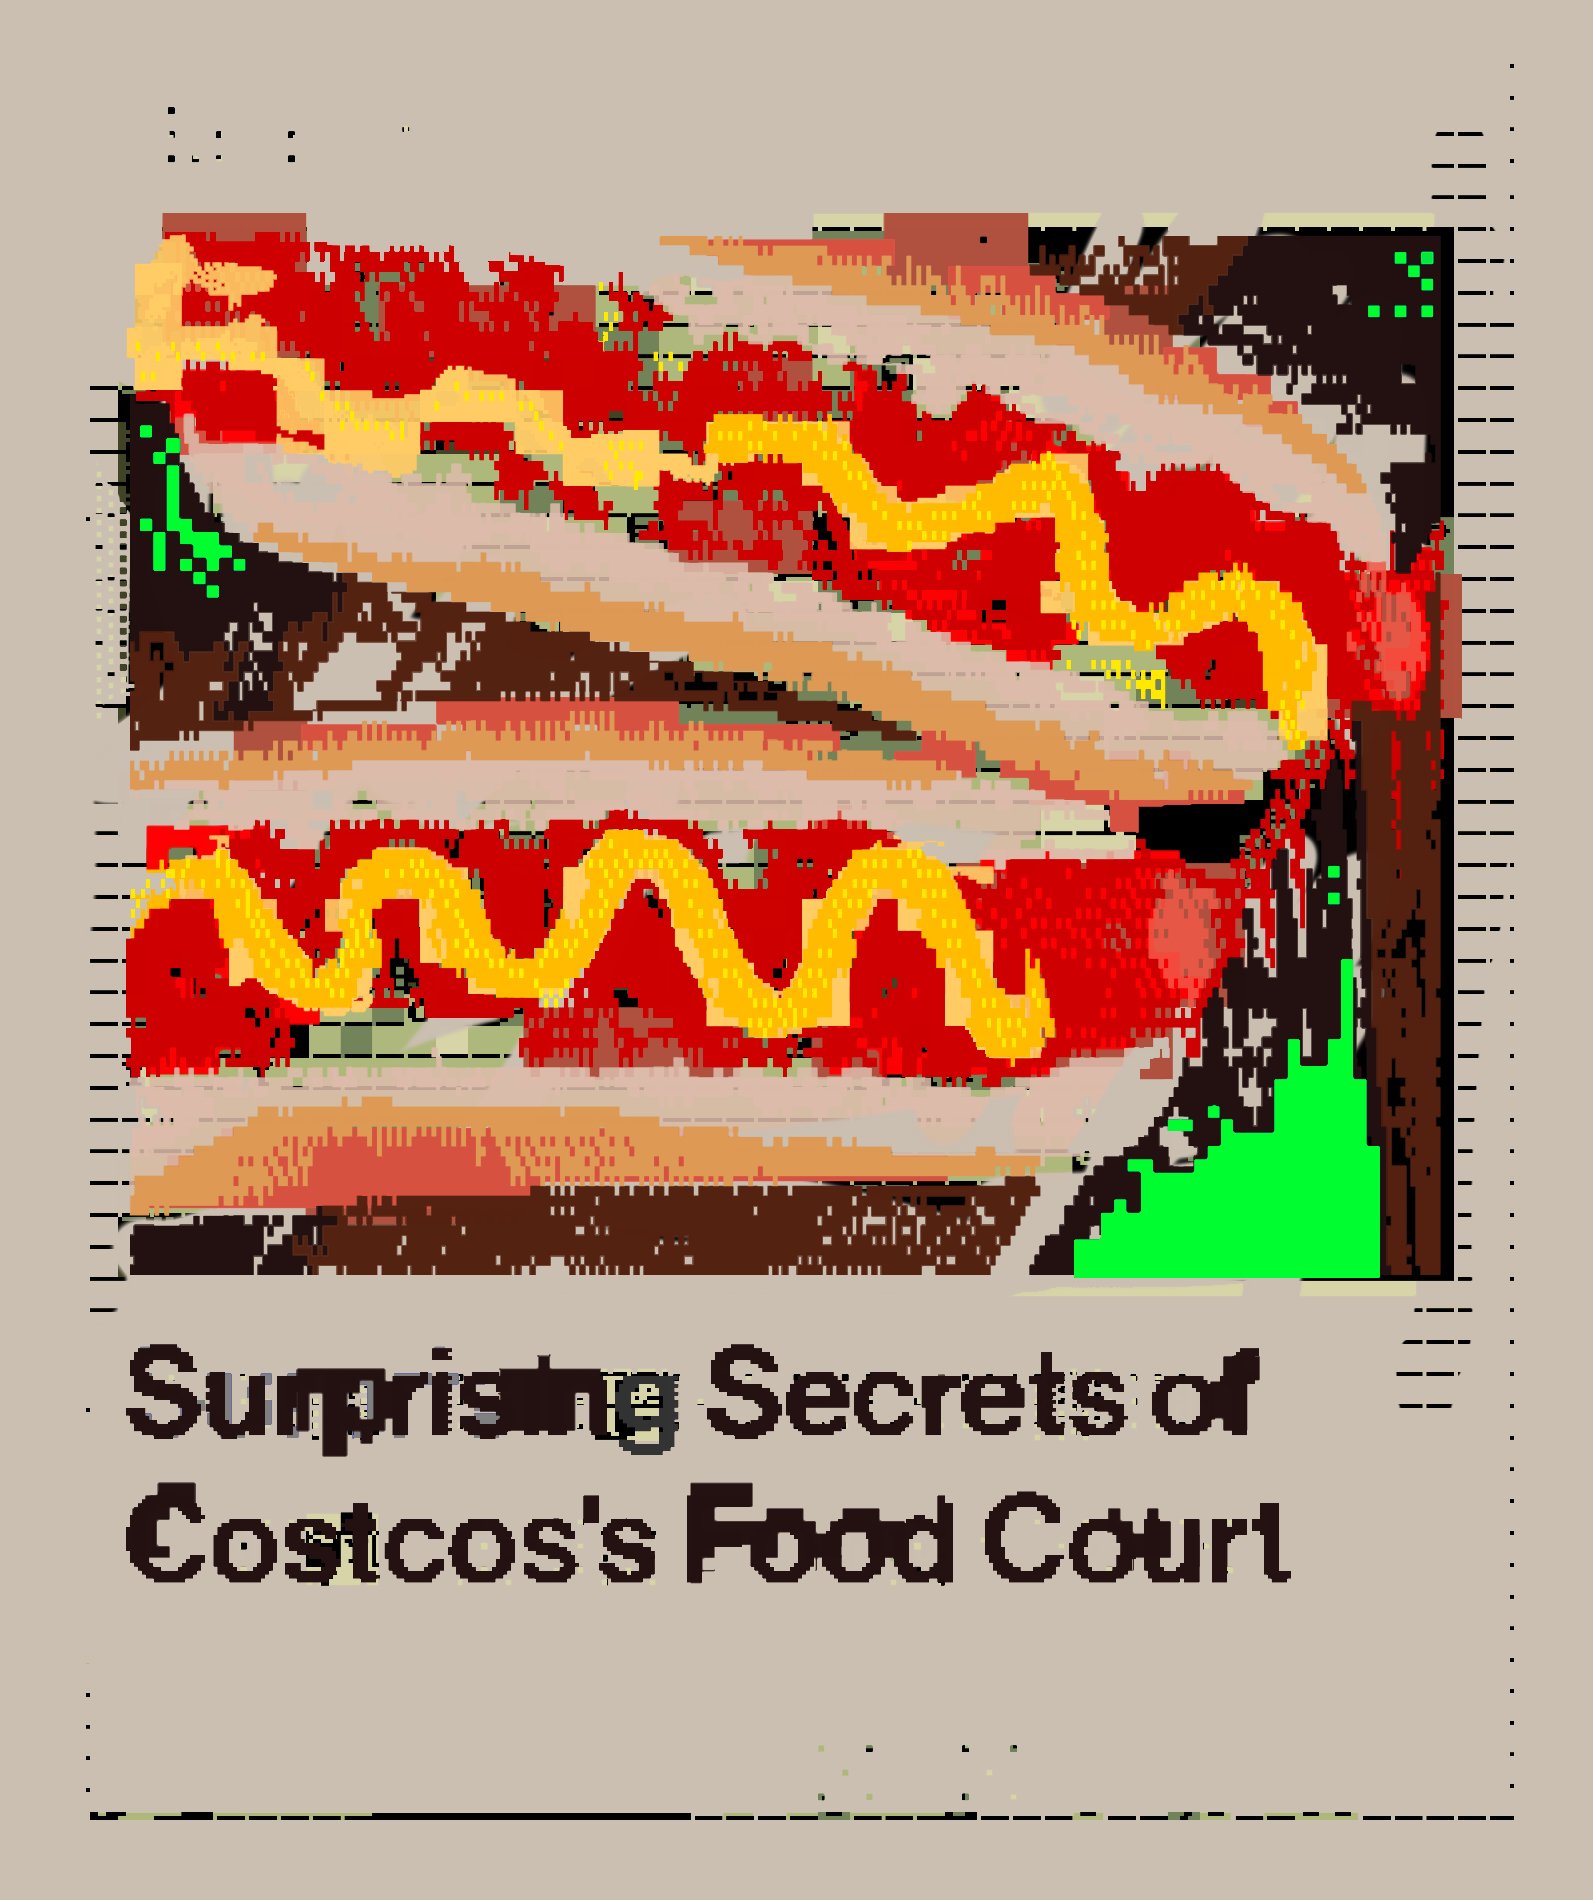 Surprising Secrets of Costco's Food Court